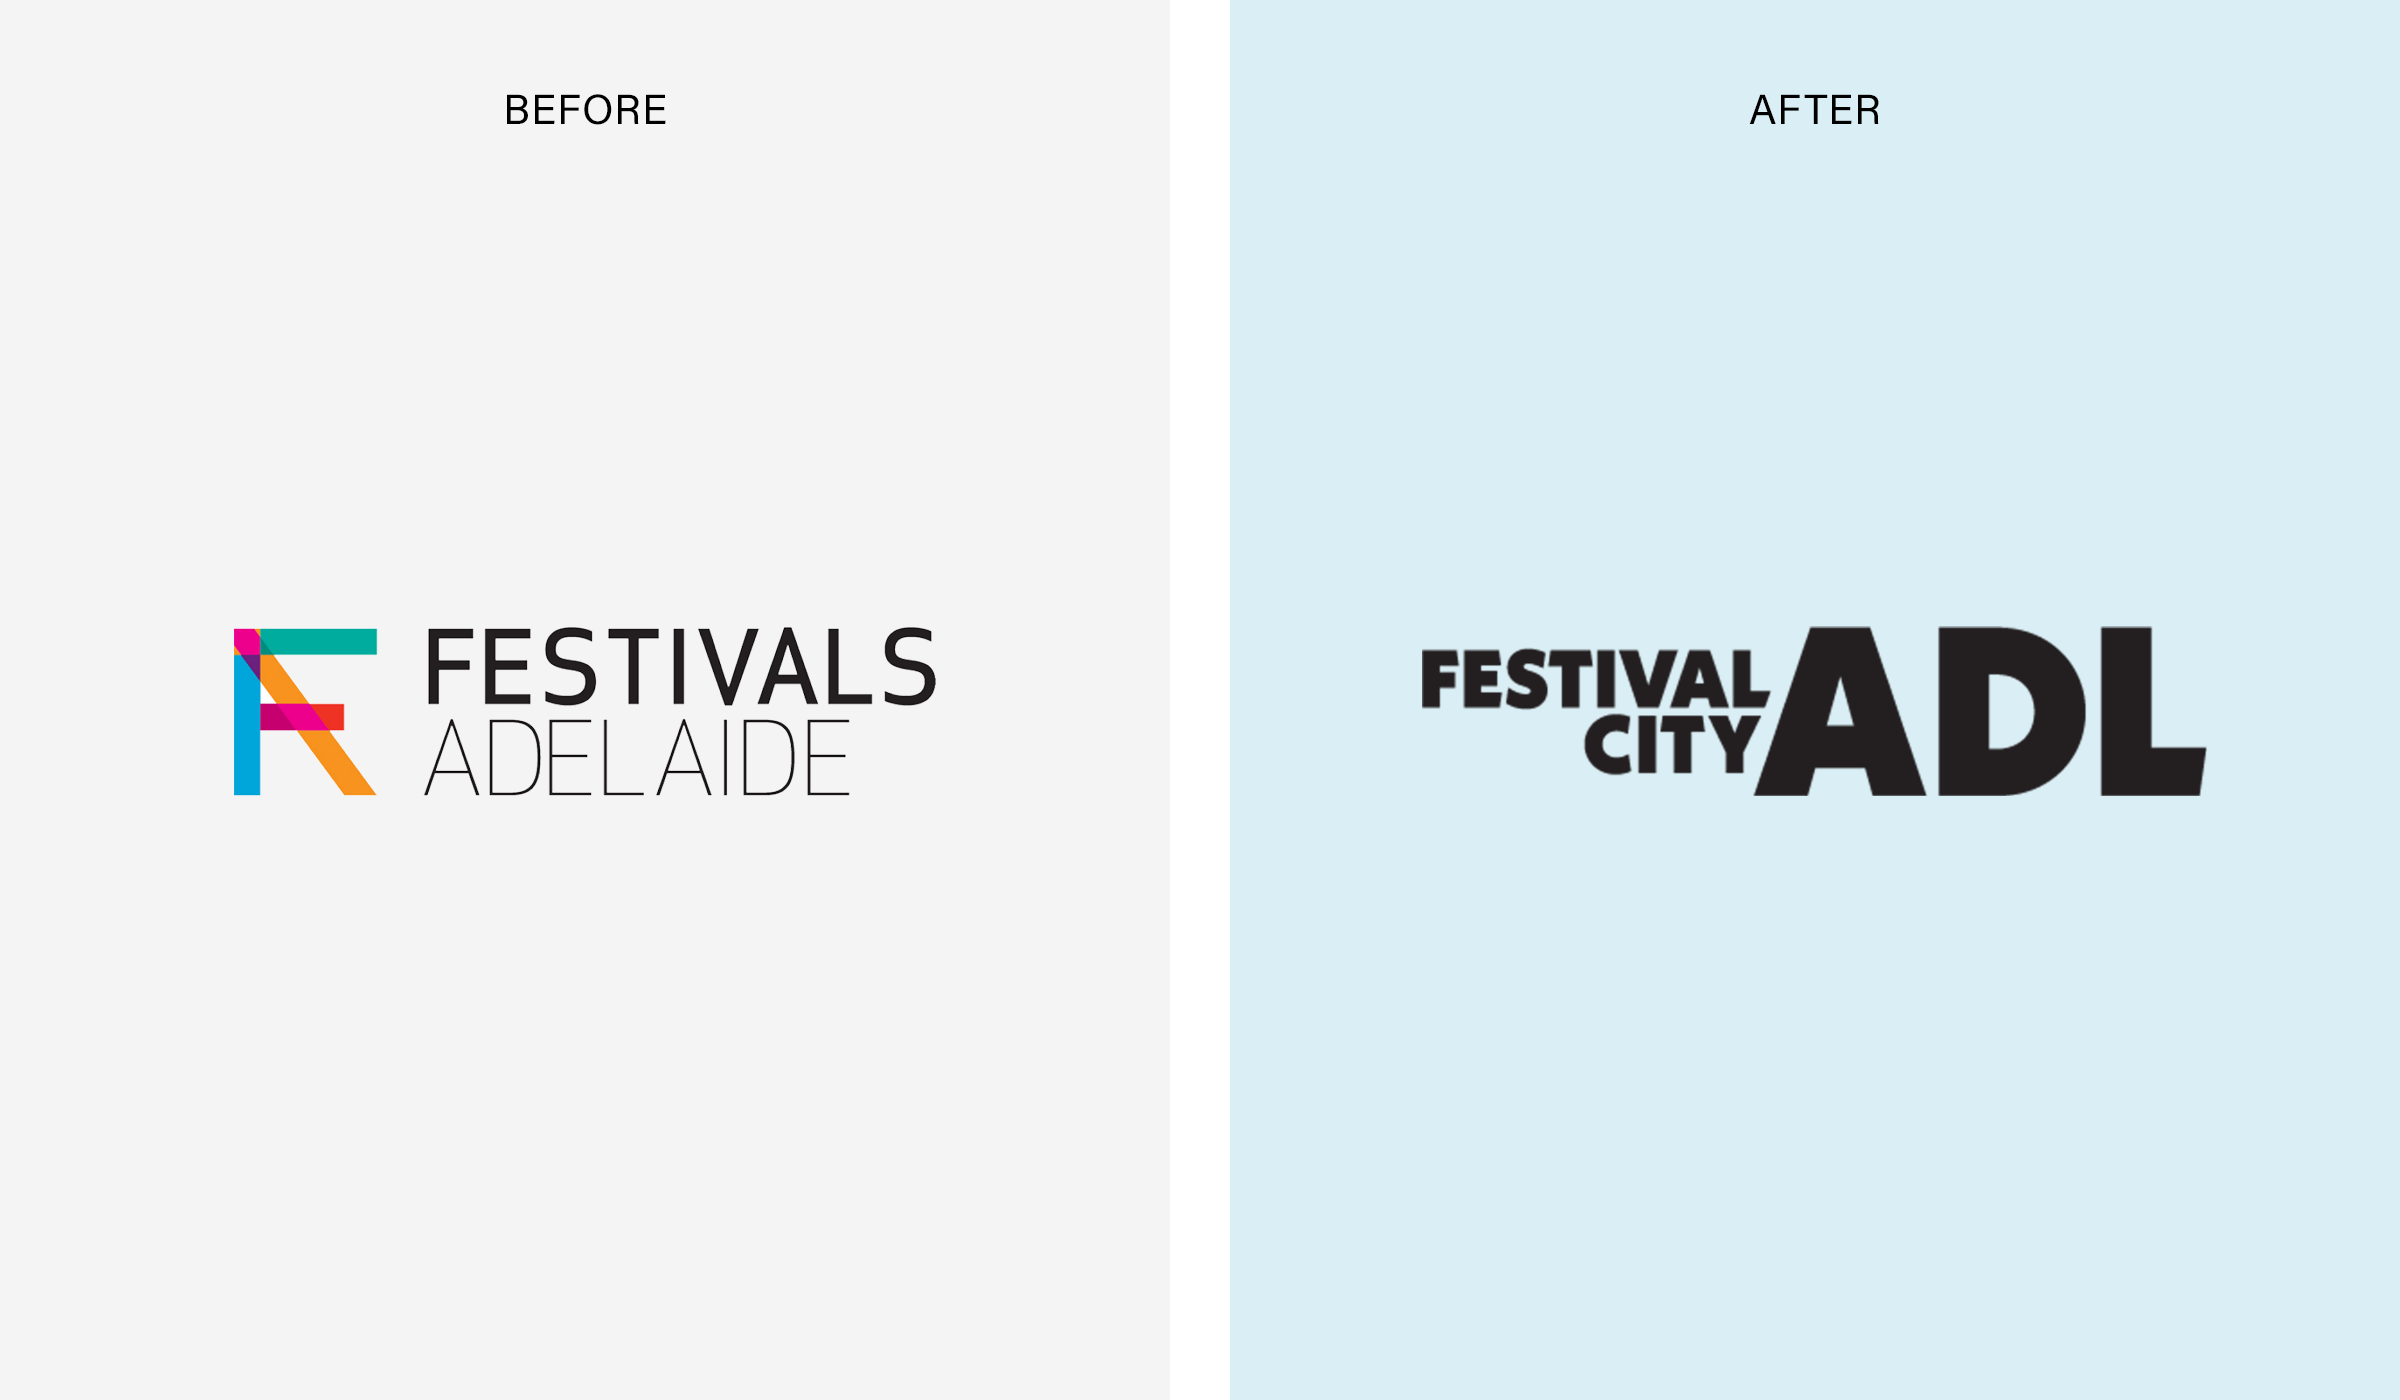 Festival City ADL logo refresh comparison